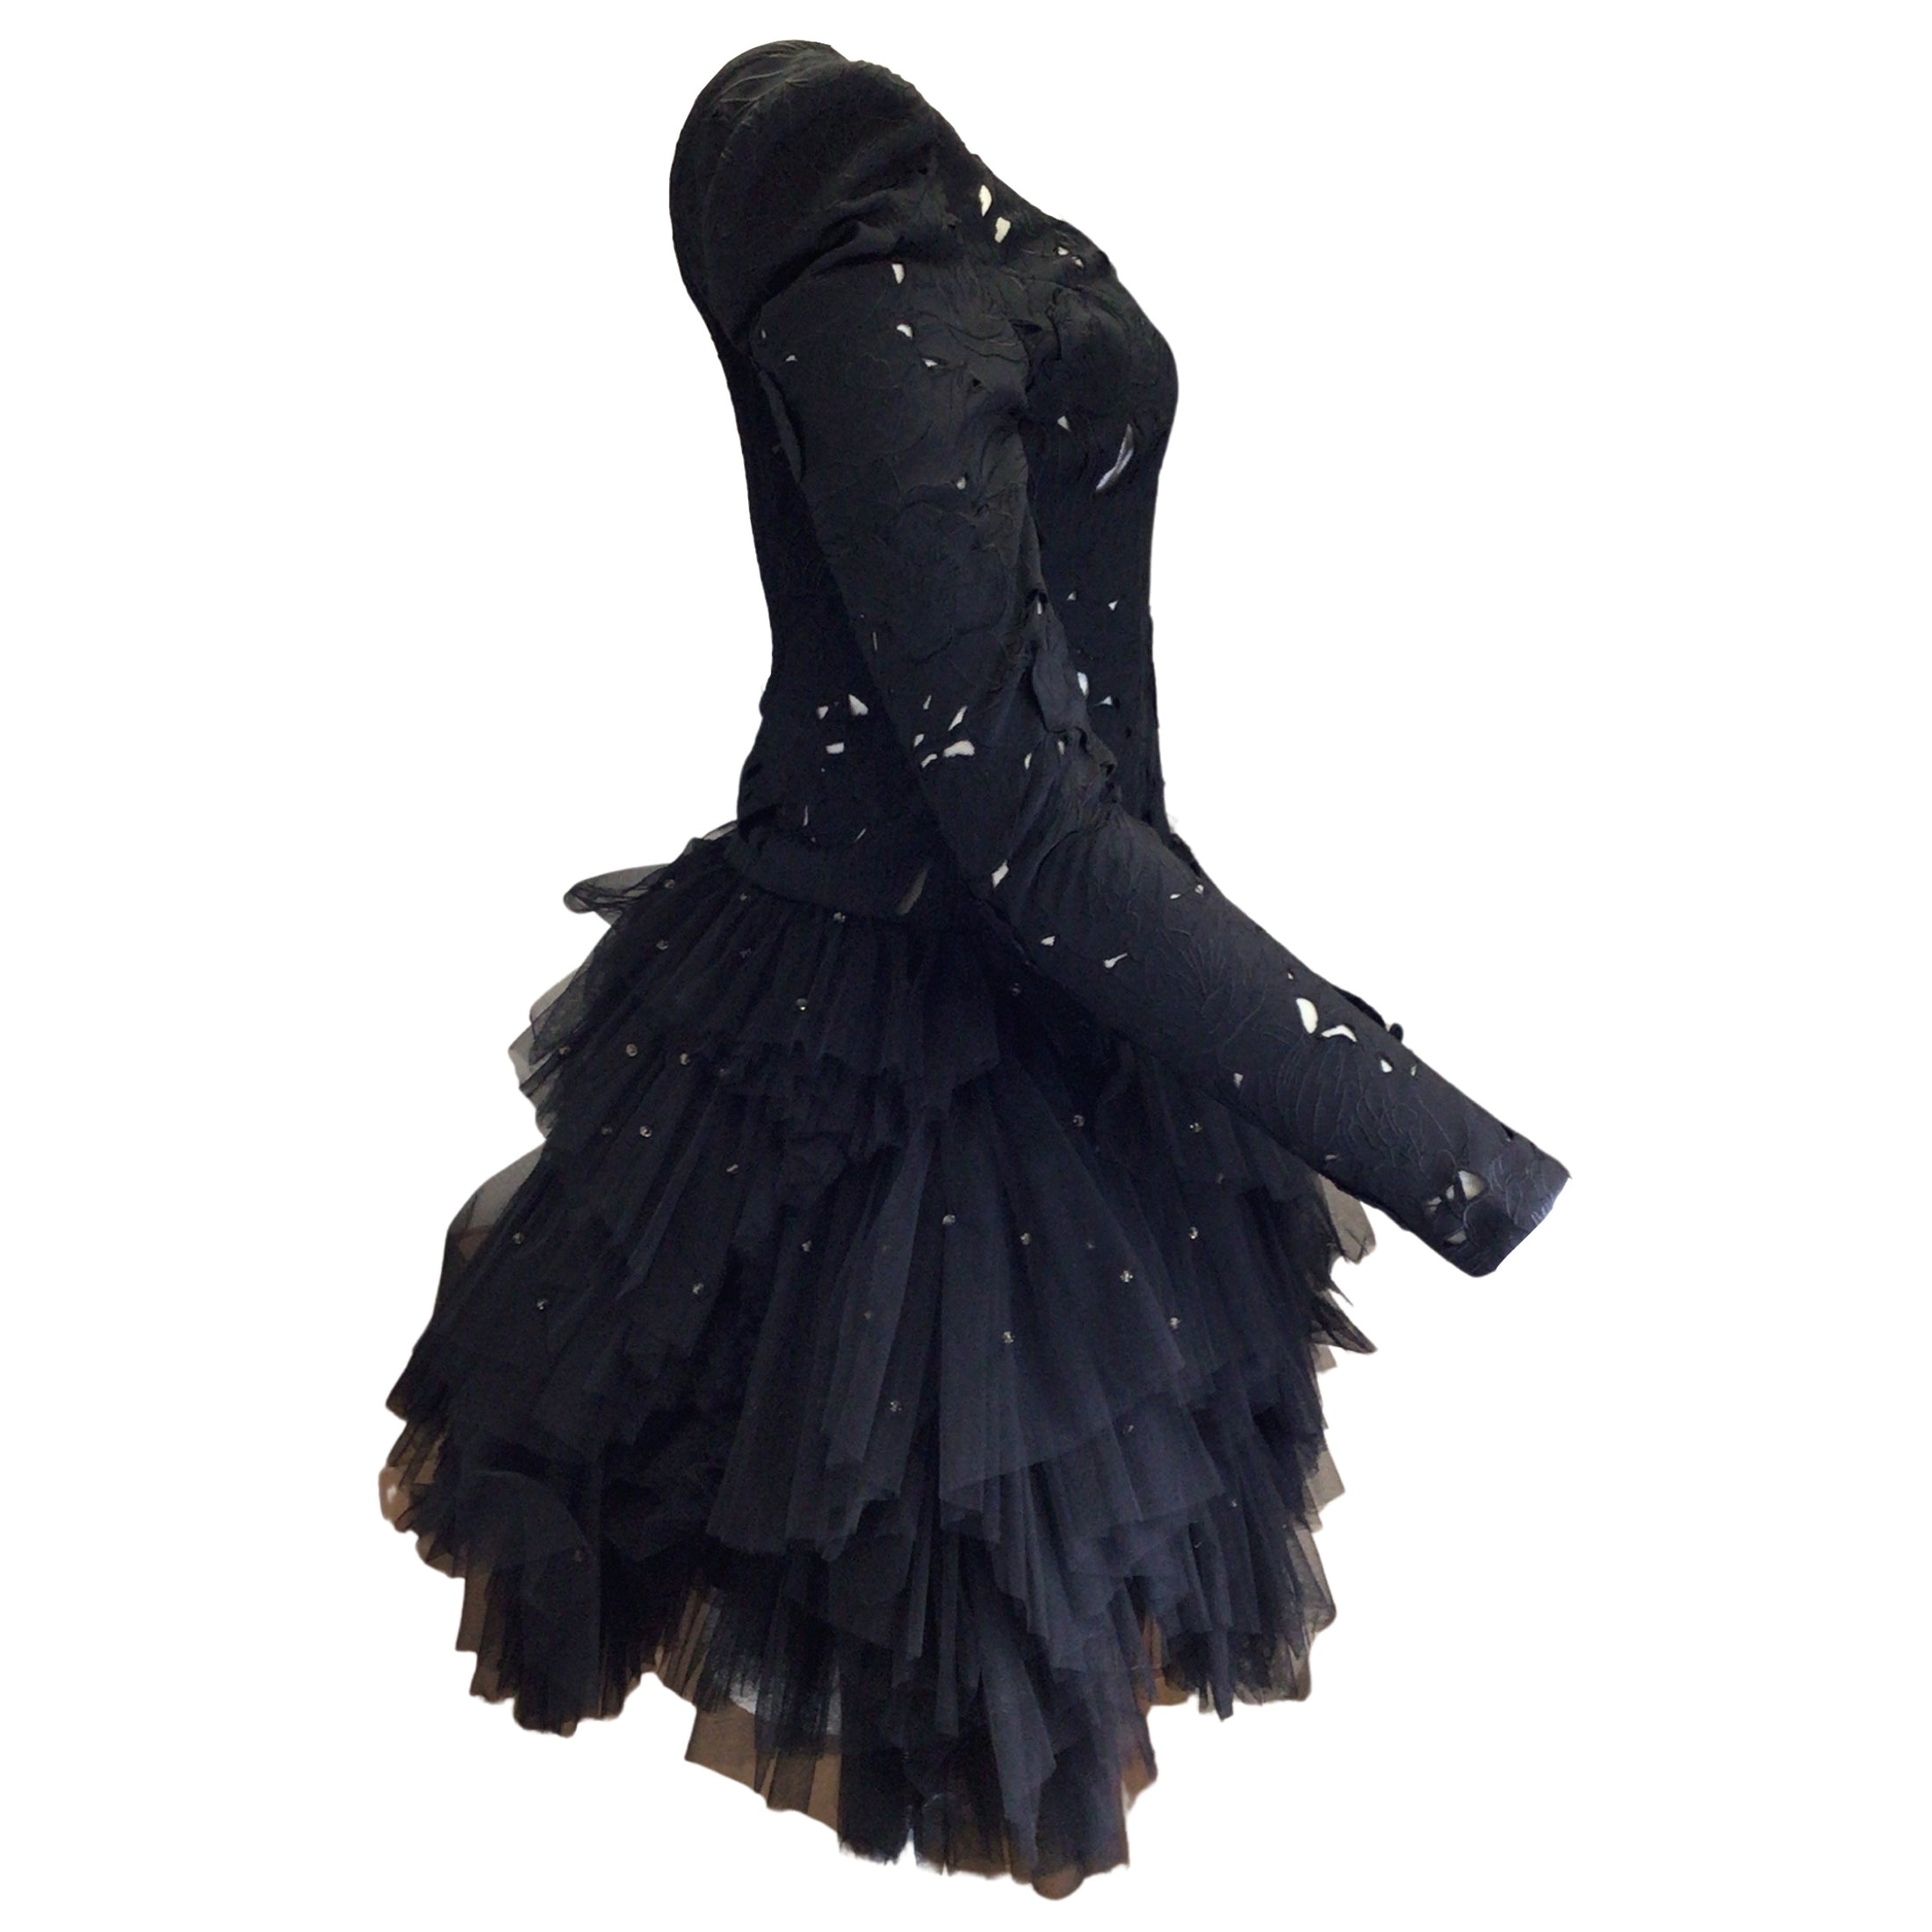 Leo Lin Black Rhinestone Embellished Mesh Tulle Skirt Floral Lace Mini Dress